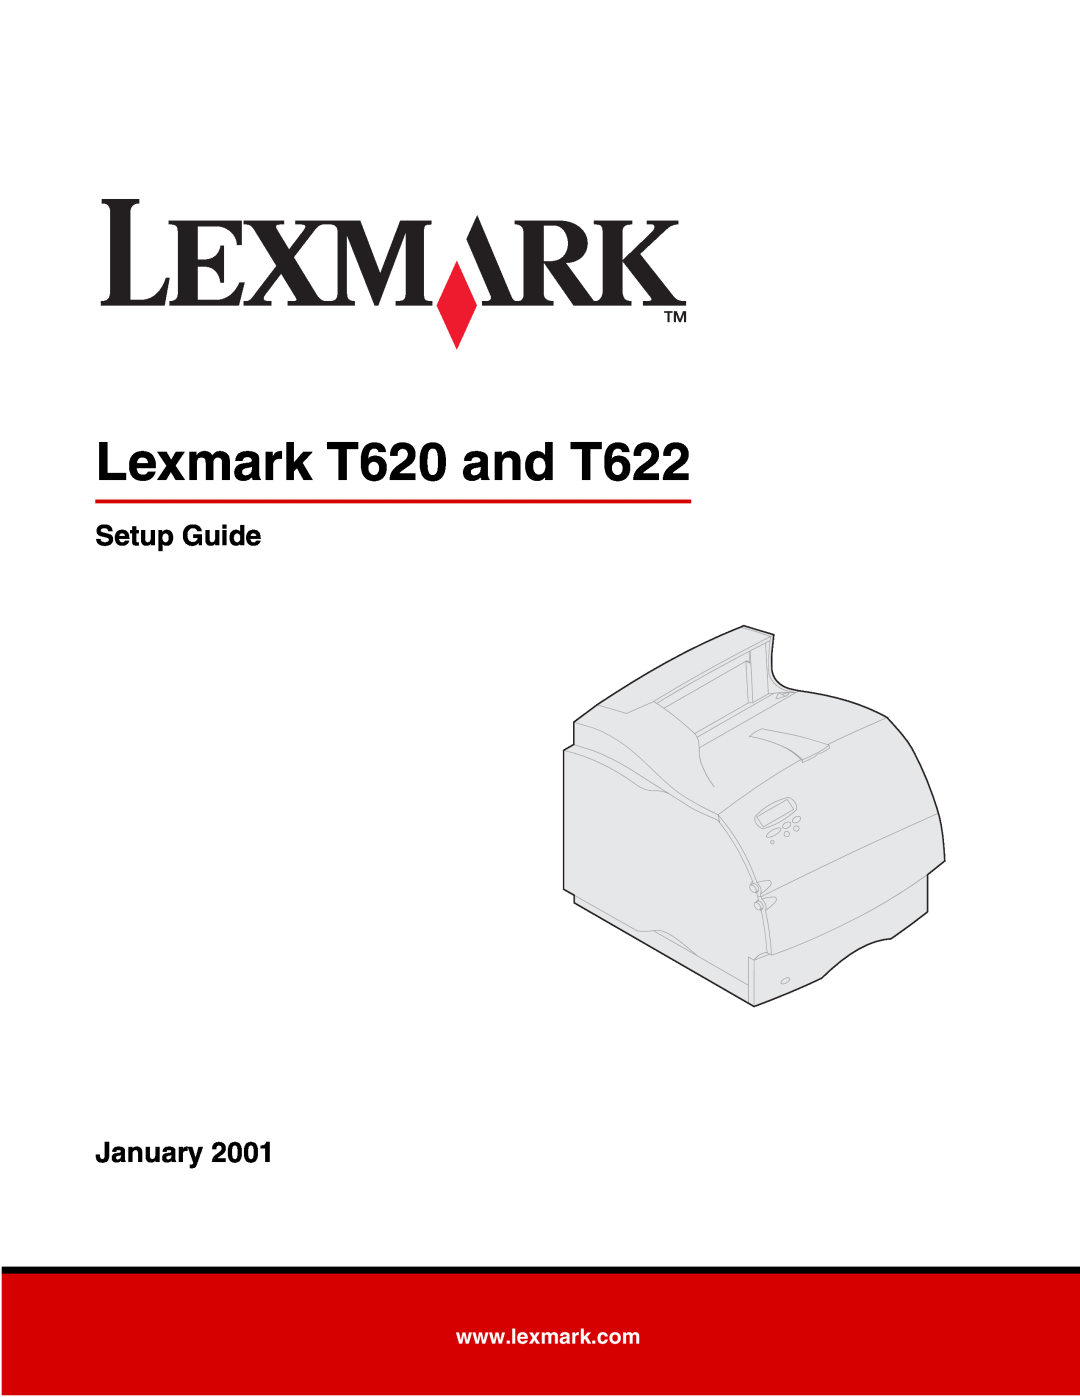 Lexmark setup guide Lexmark T620 and T622, Setup Guide January 